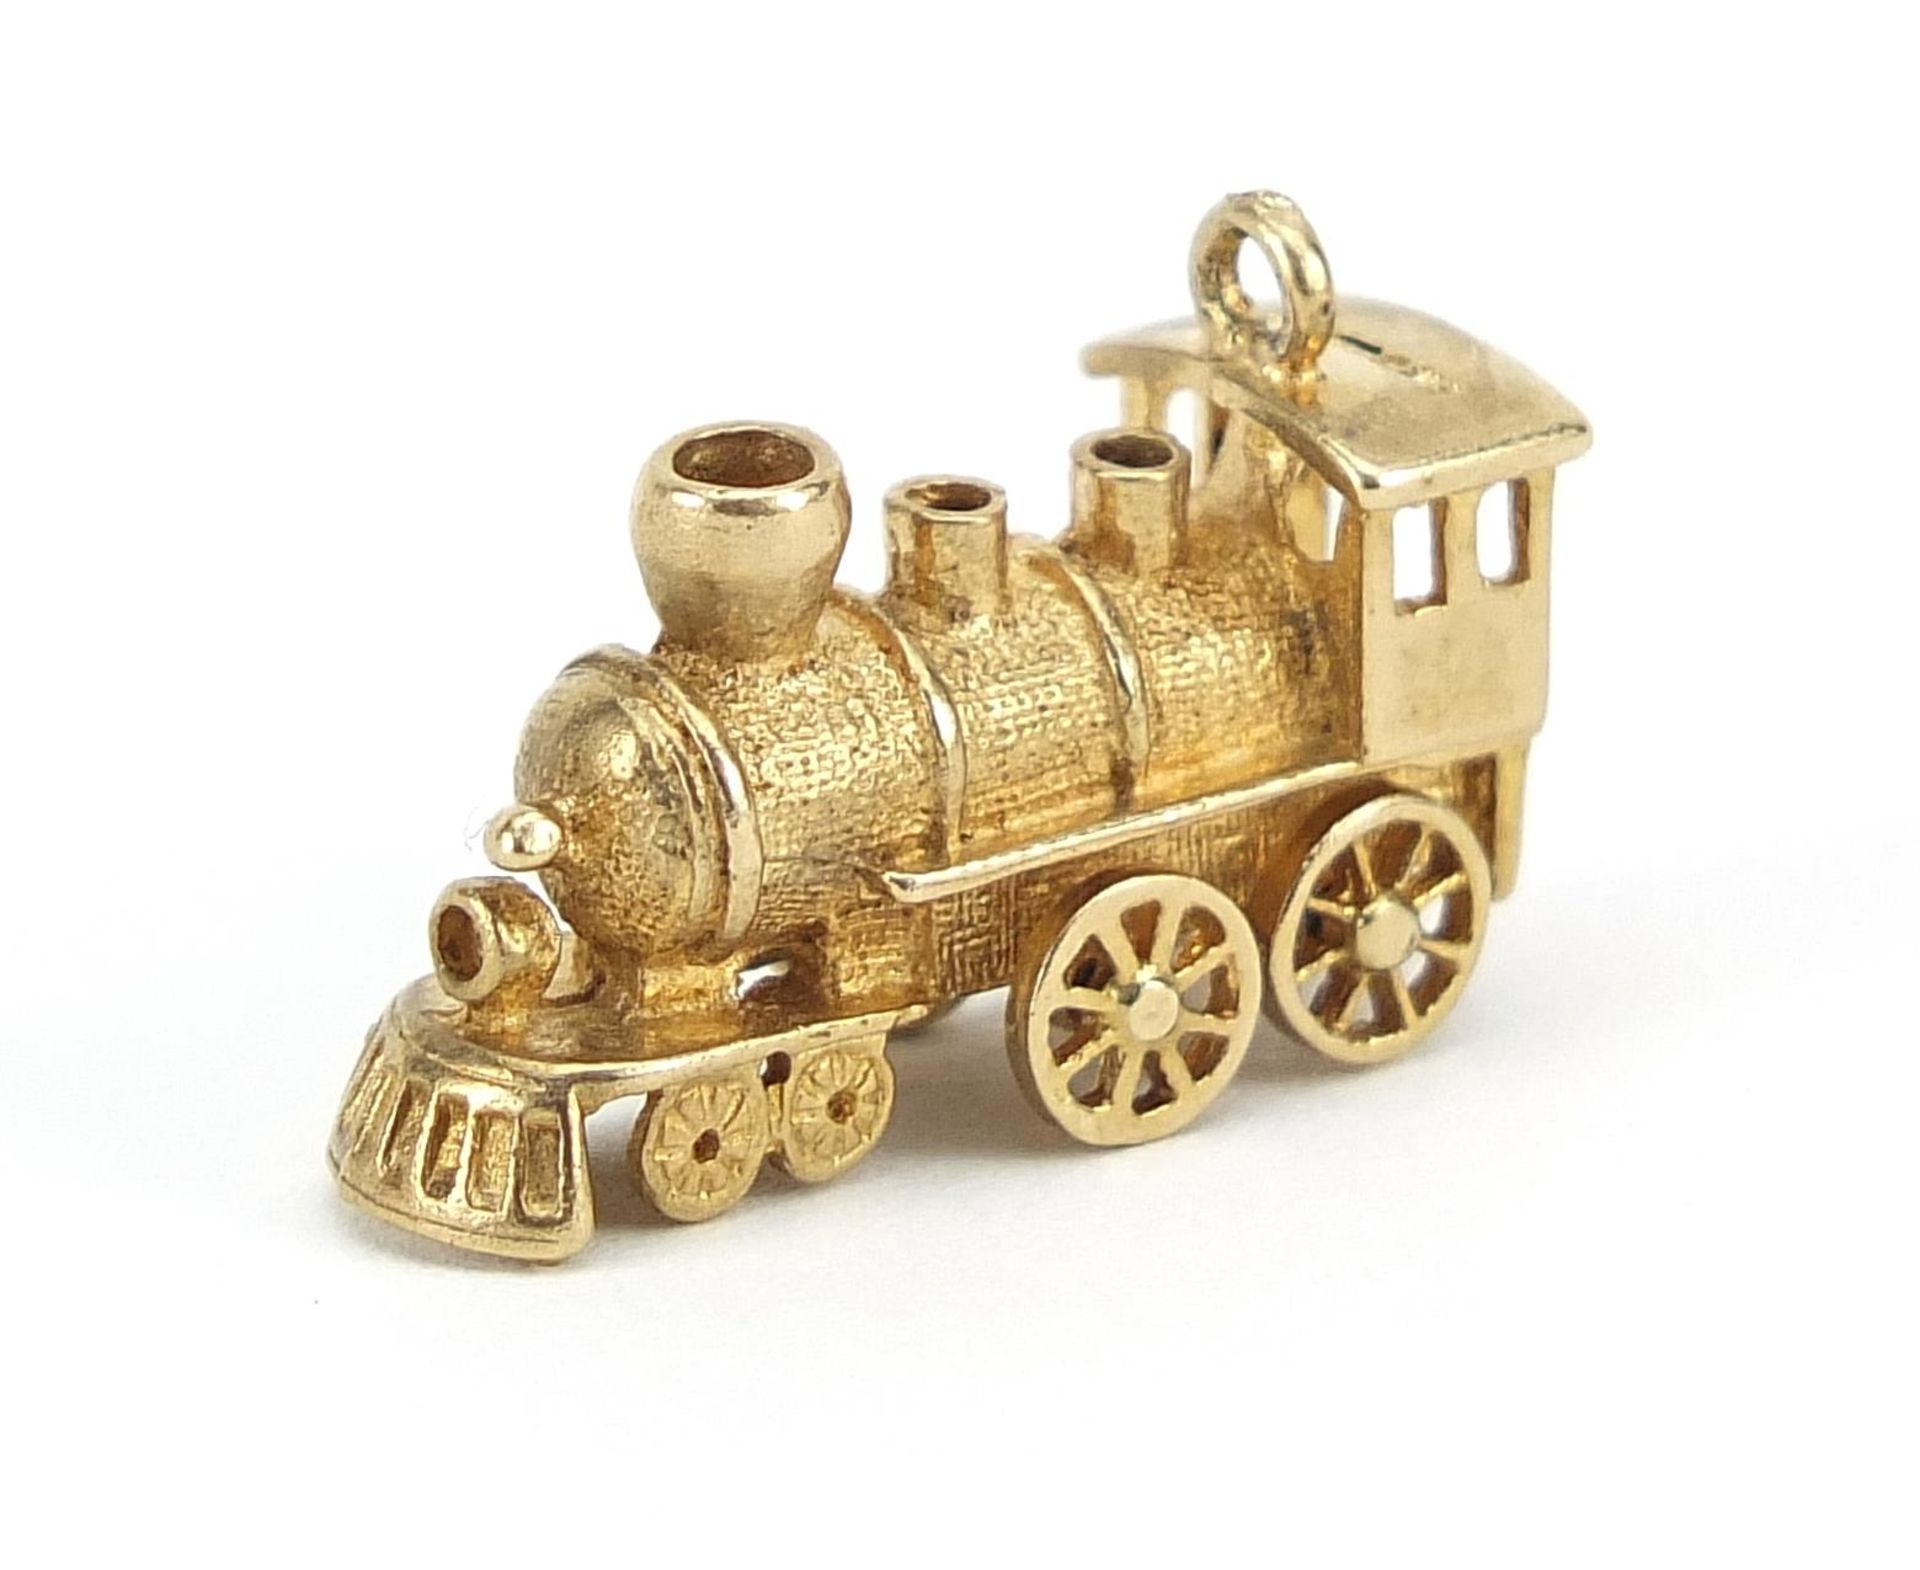 9ct gold locomotive charm, 2.1cm in length, 4.5g